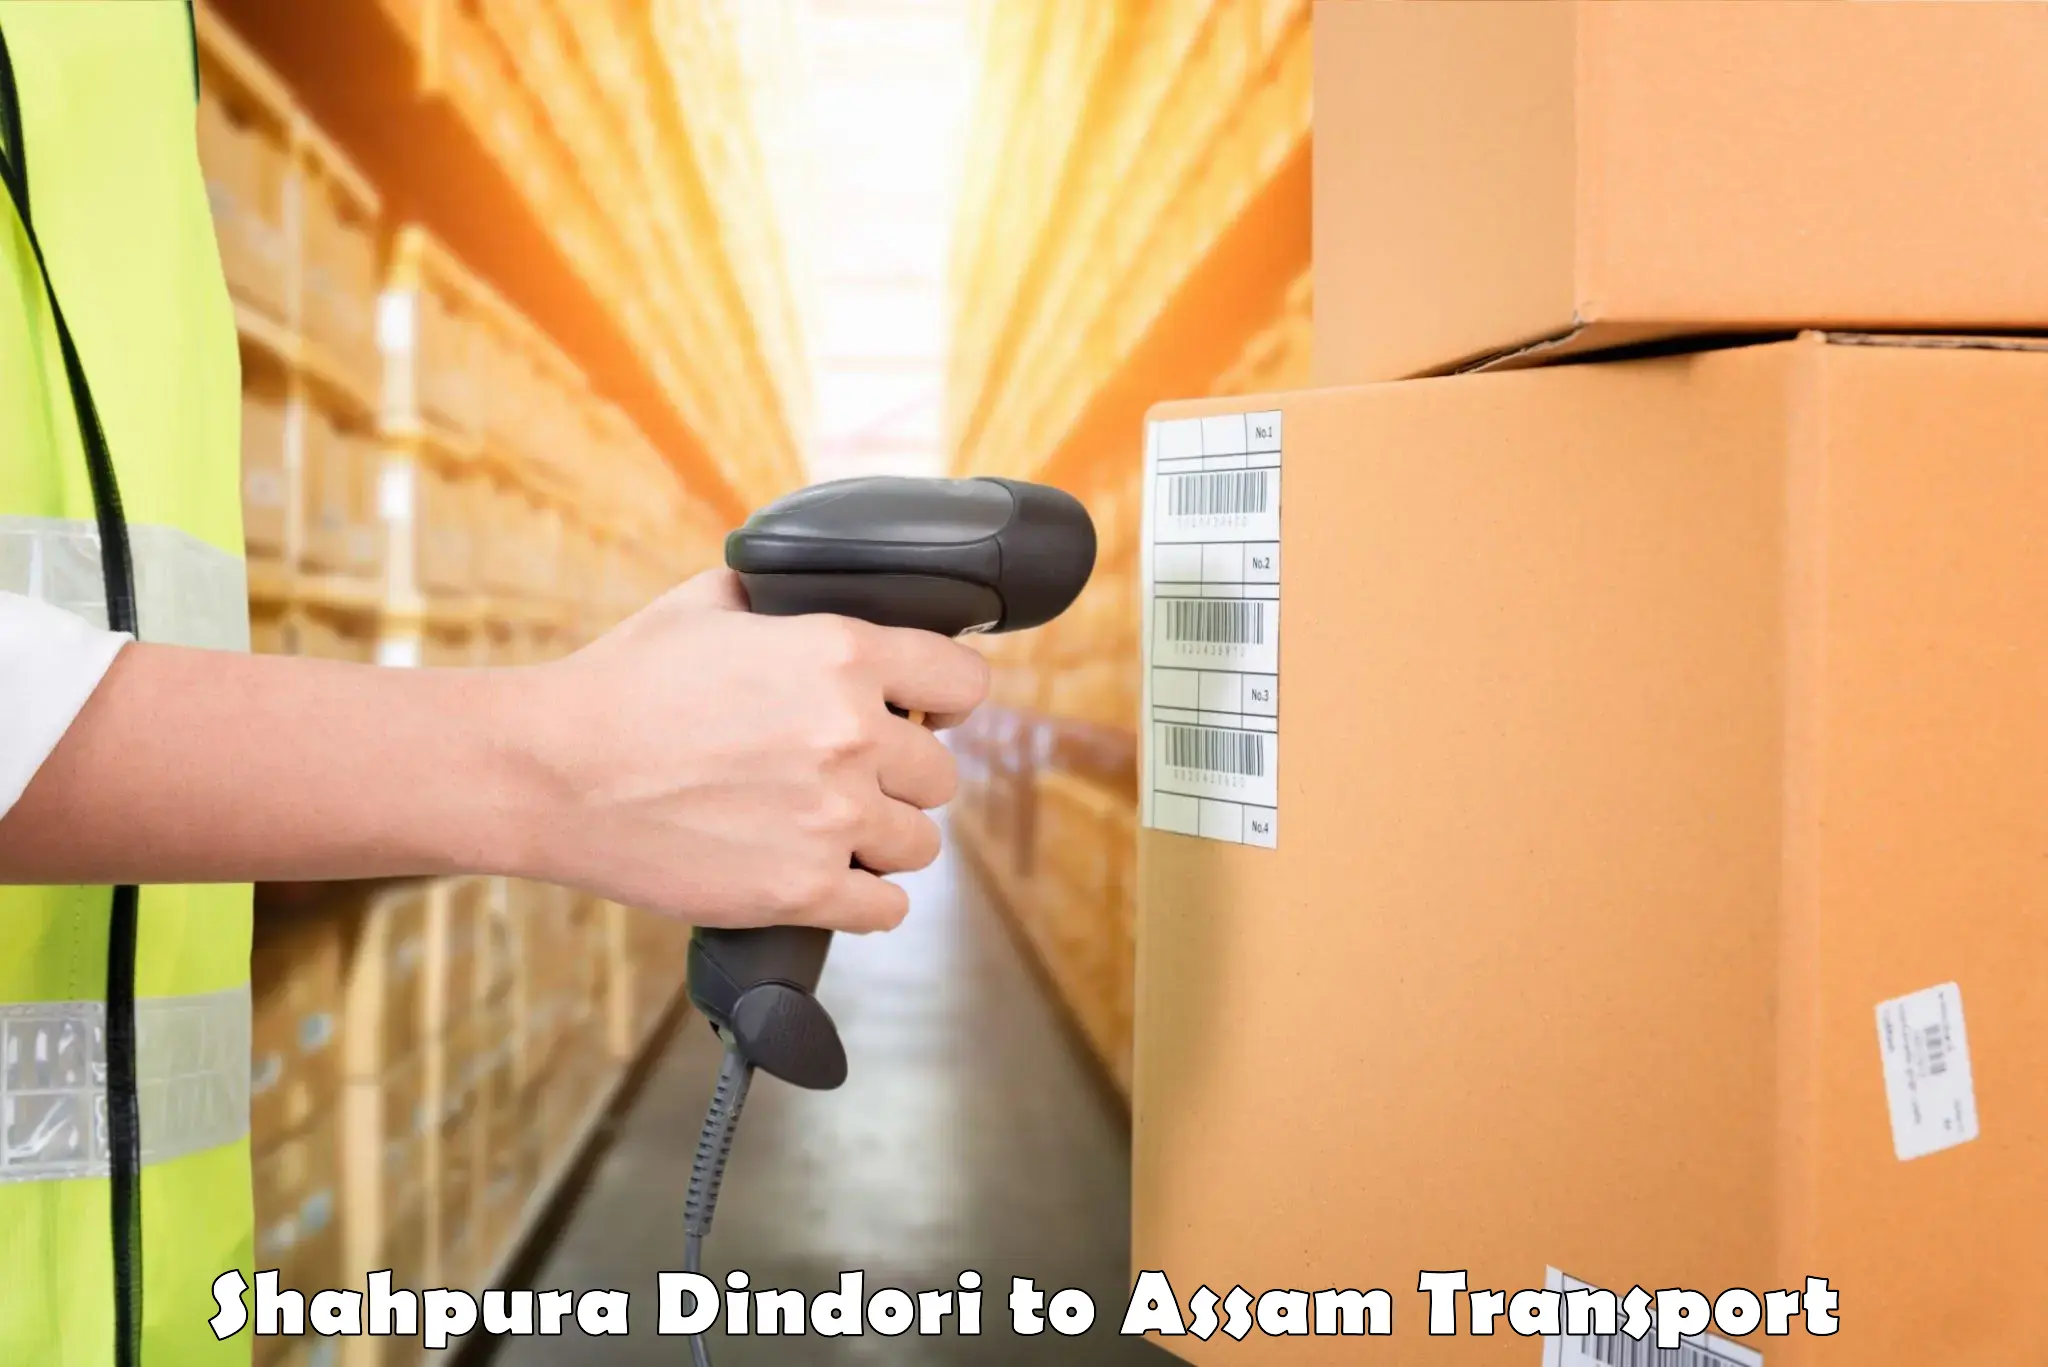 Nearest transport service Shahpura Dindori to Assam